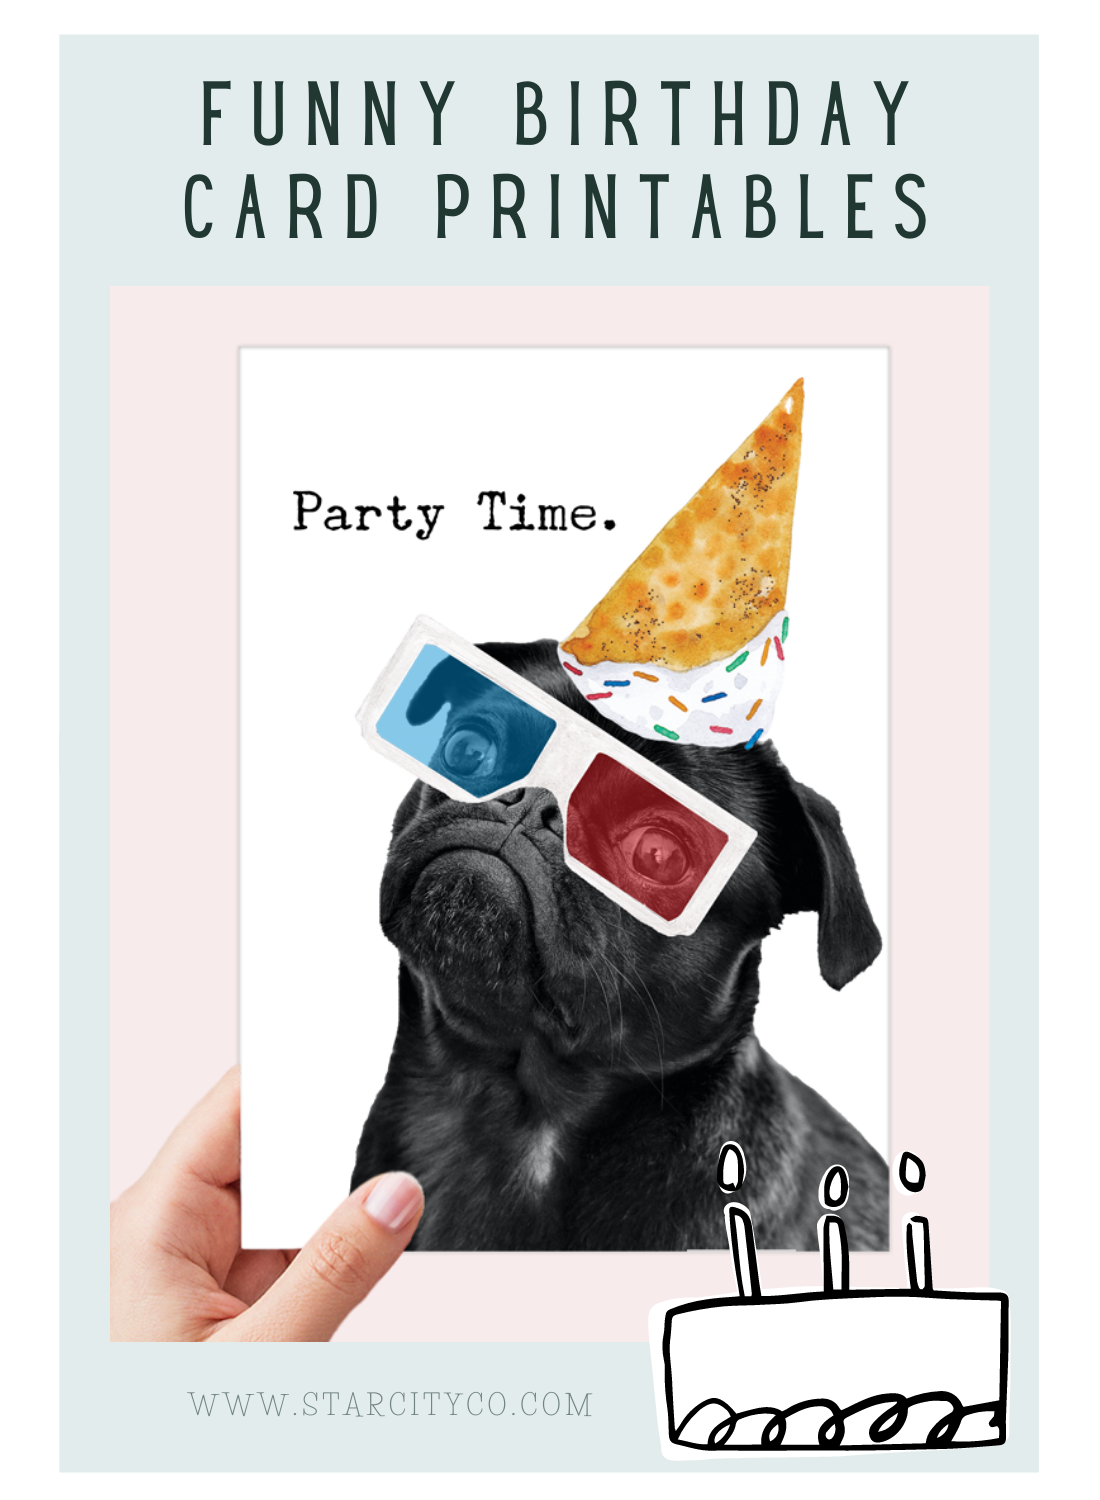 Pug Party Time Birthday Card Printable - Digital Download